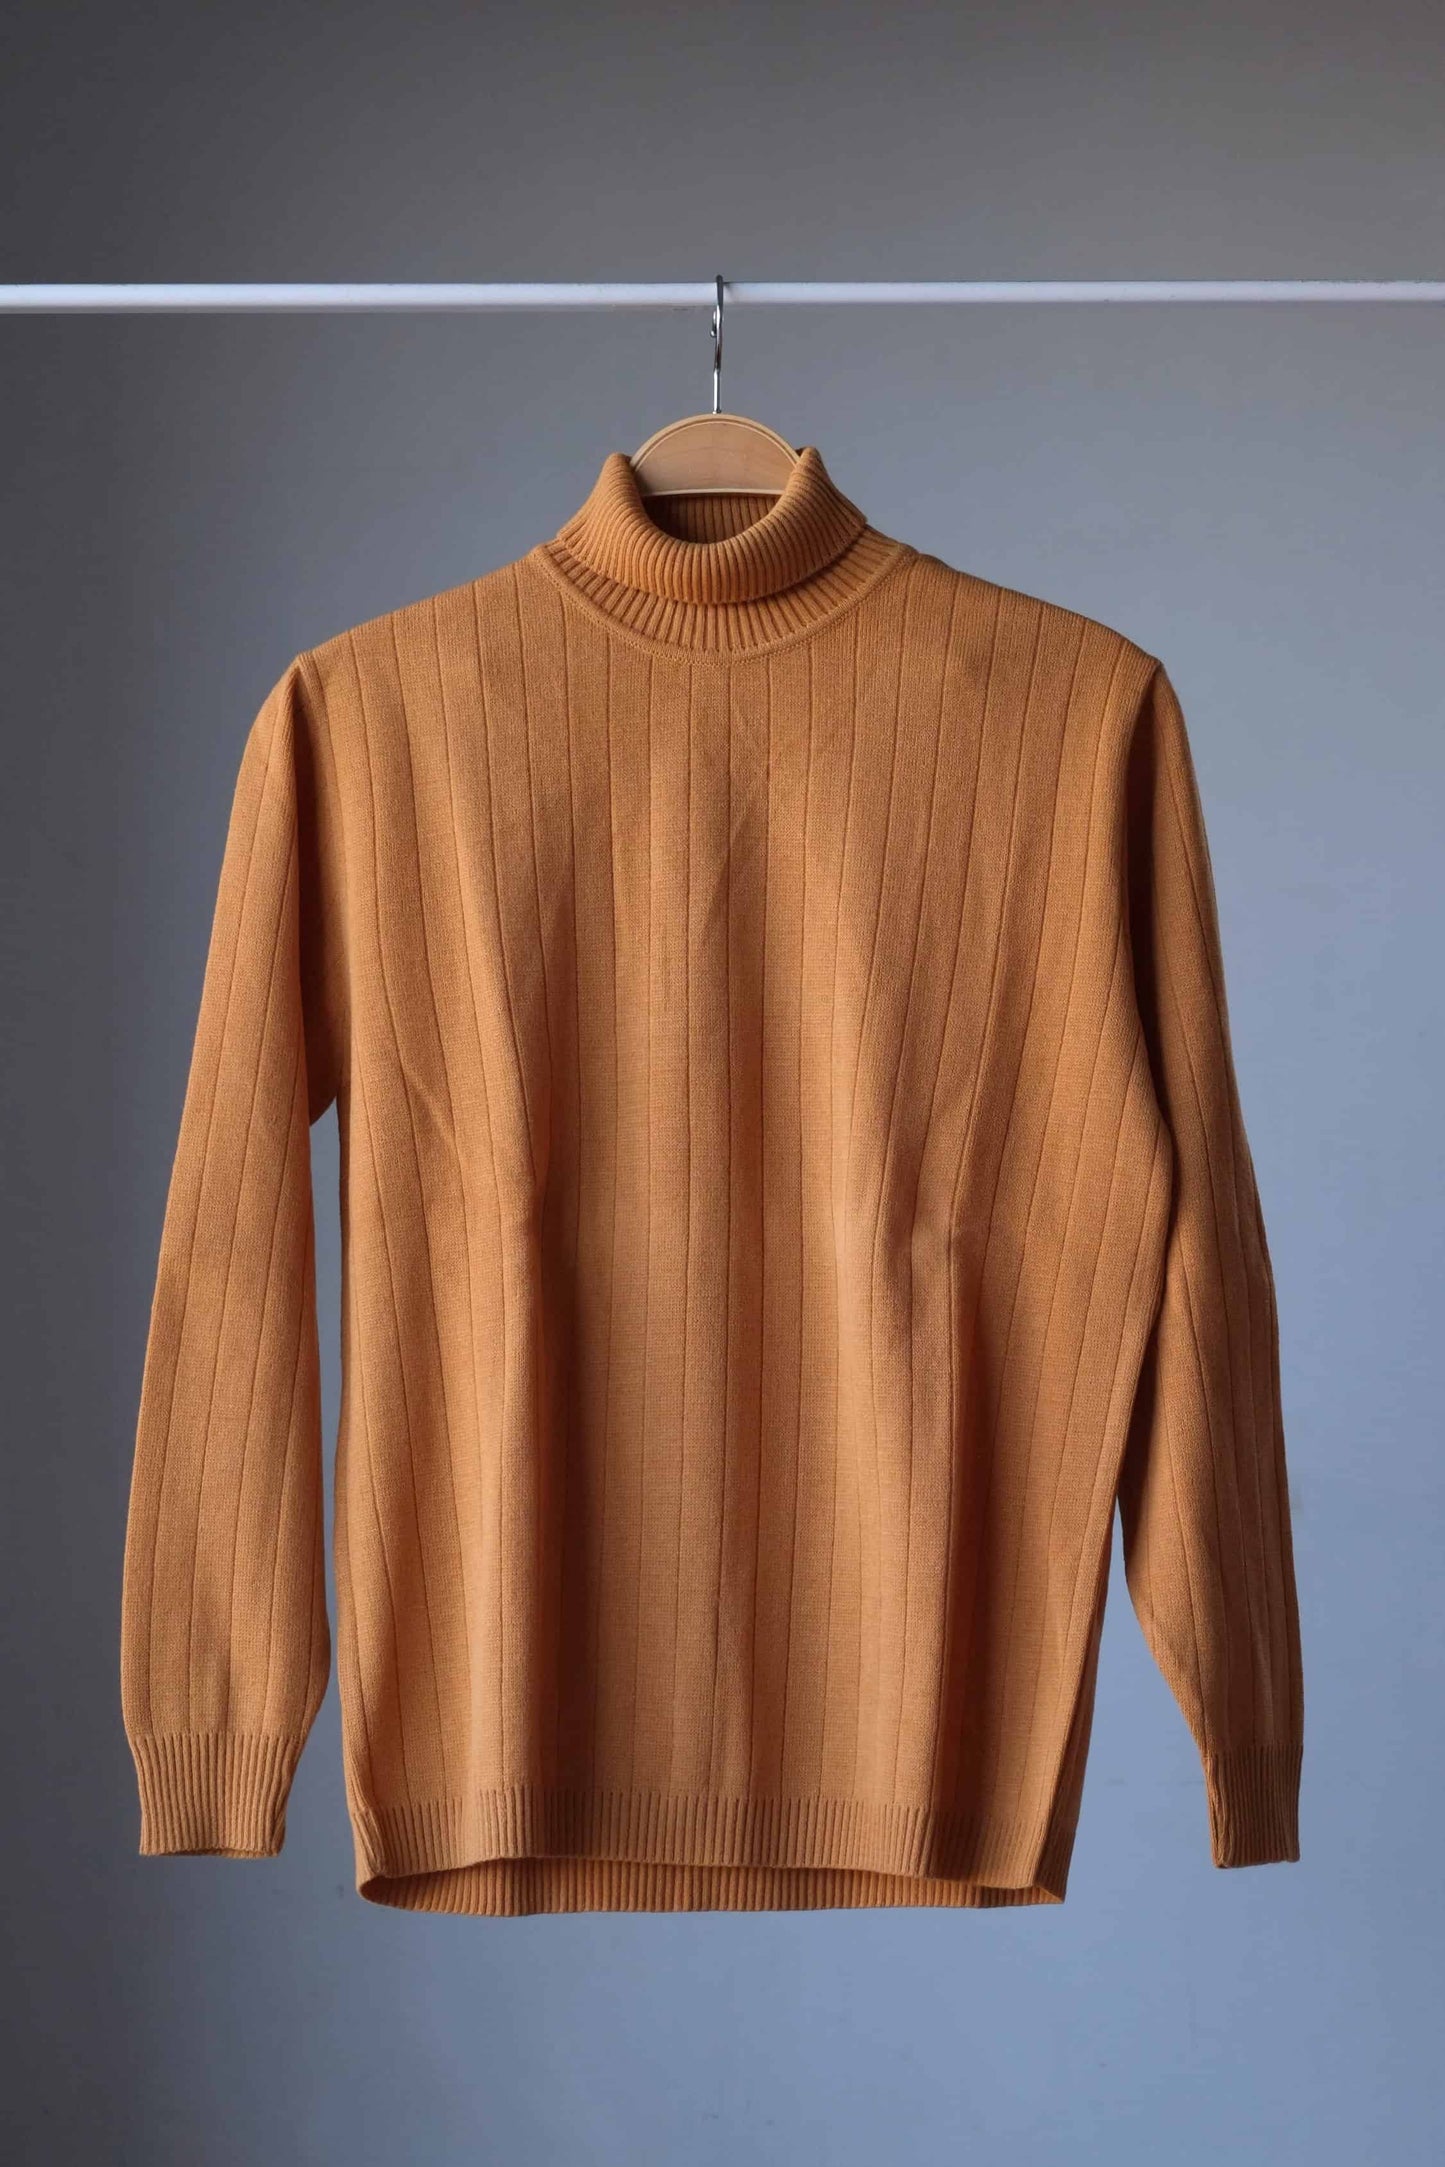 Vintage 70's Turtleneck Sweater honey